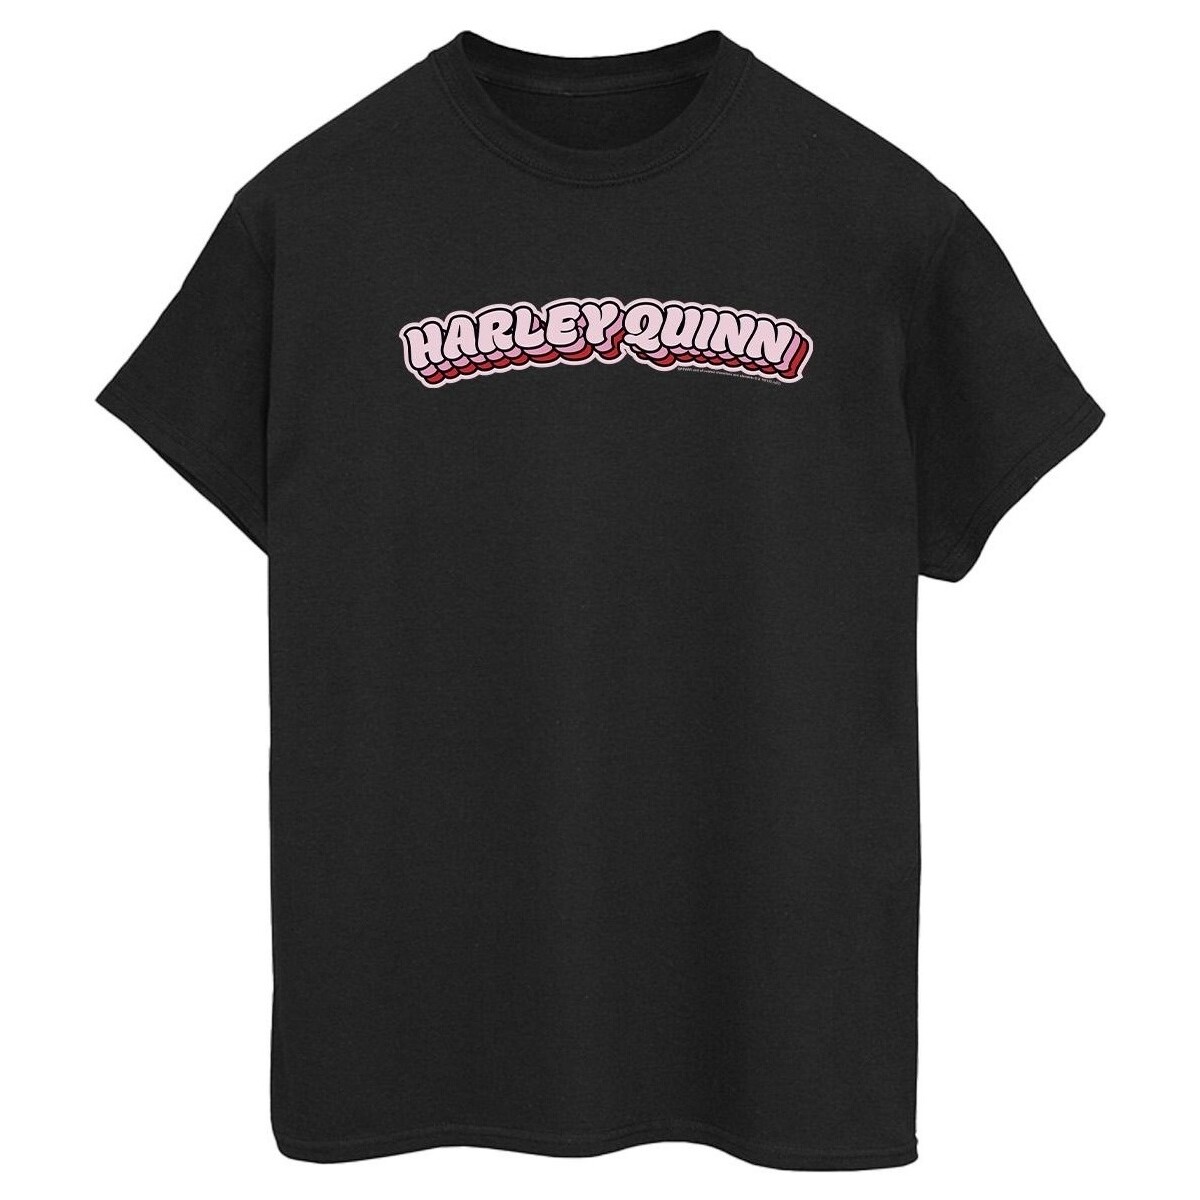 Vêtements Femme T-shirts manches longues Dc Comics Batman Harley Quinn Logo Noir